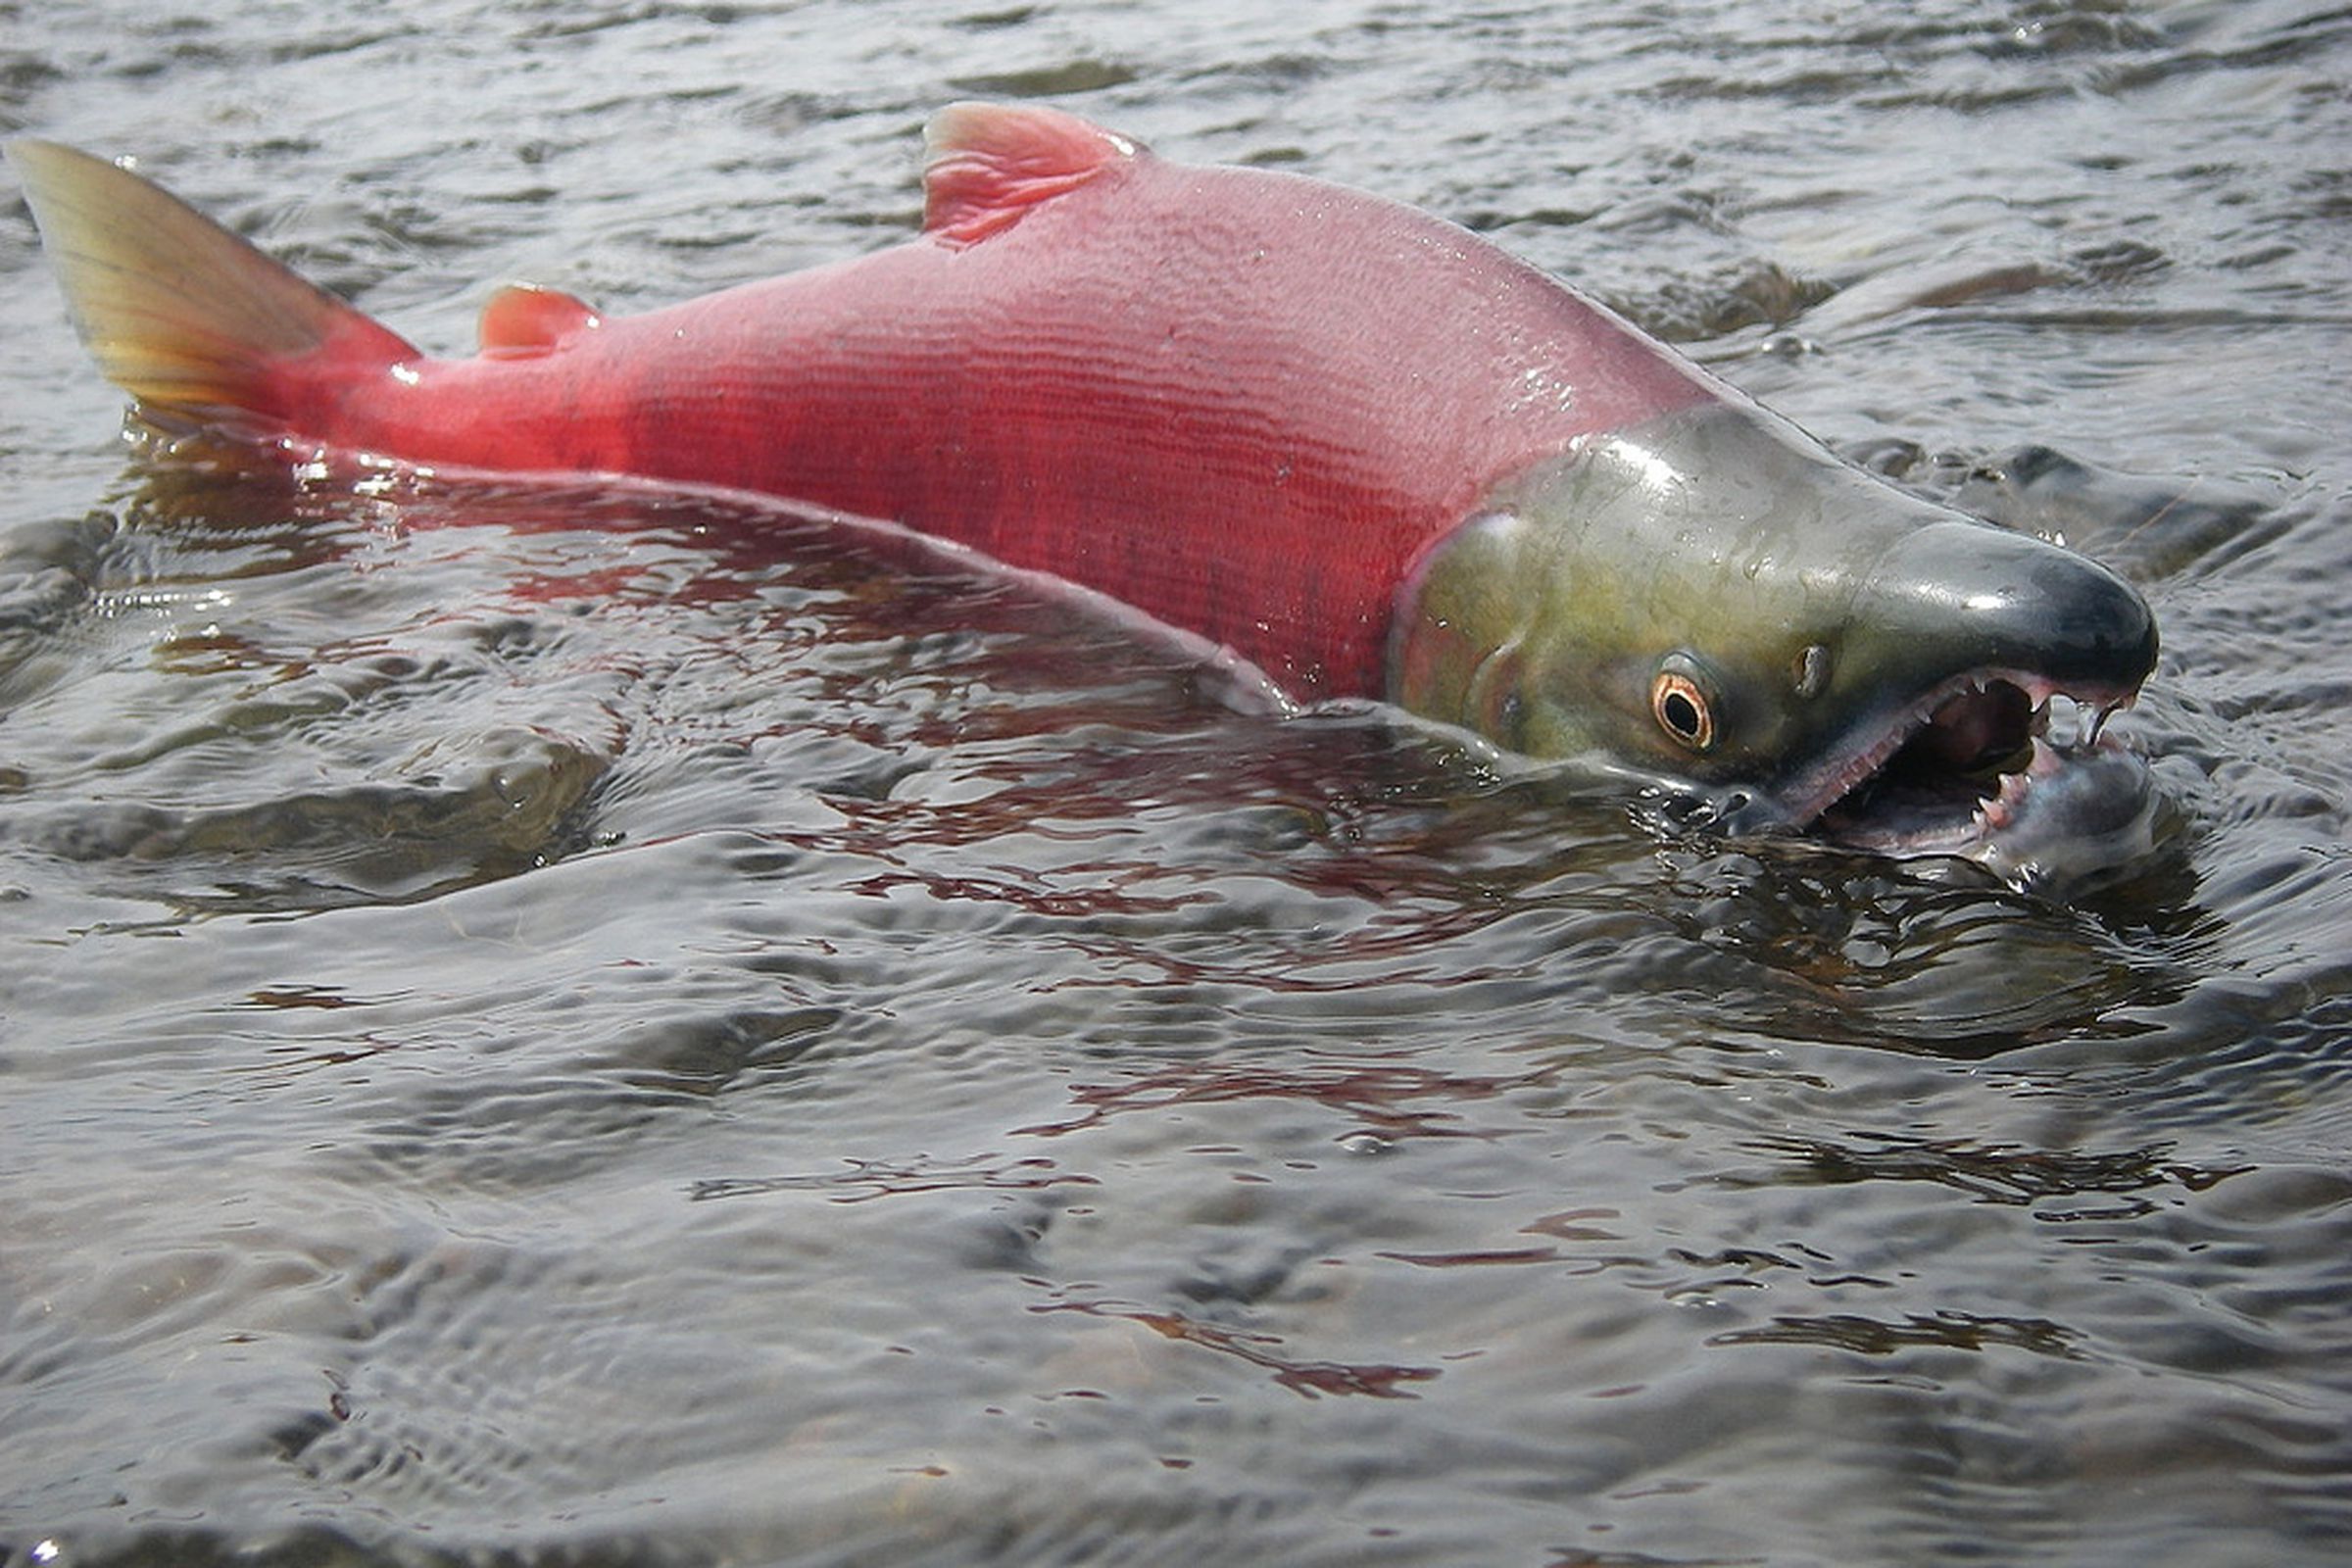 Male sockeye salmon spawning north of Dillingham, Alaska